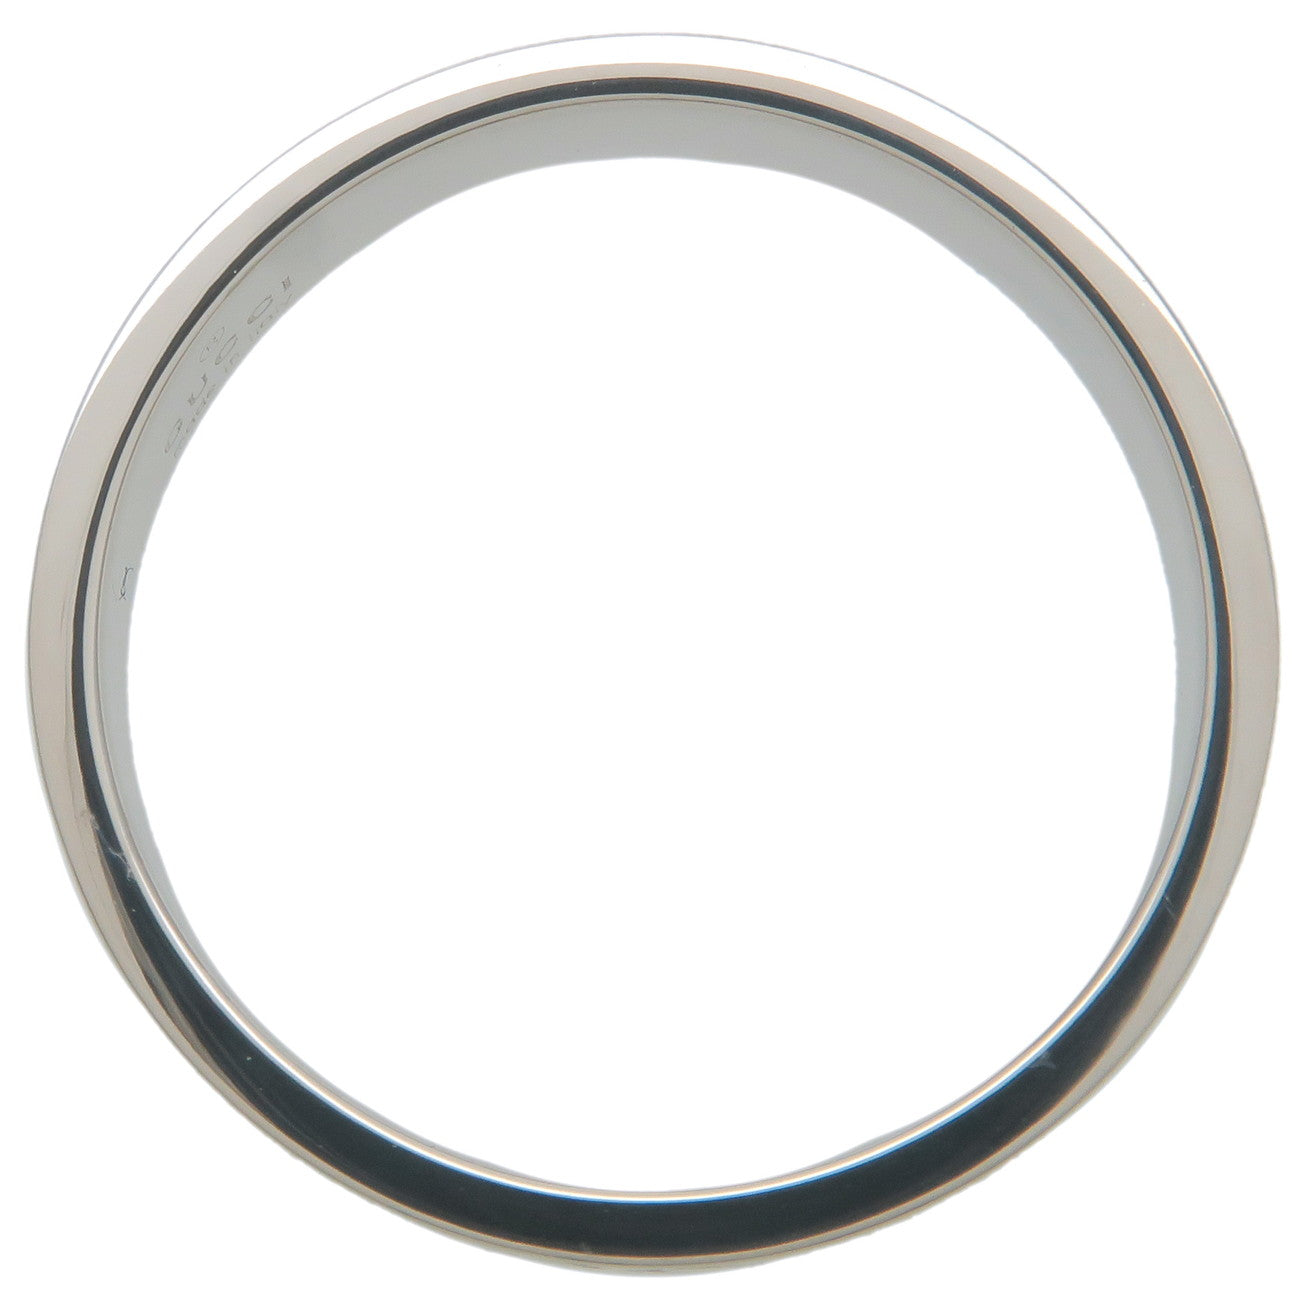 GUCCI Icon Ring K18WG 750WG White Gold #10 US5-5.5 EU50